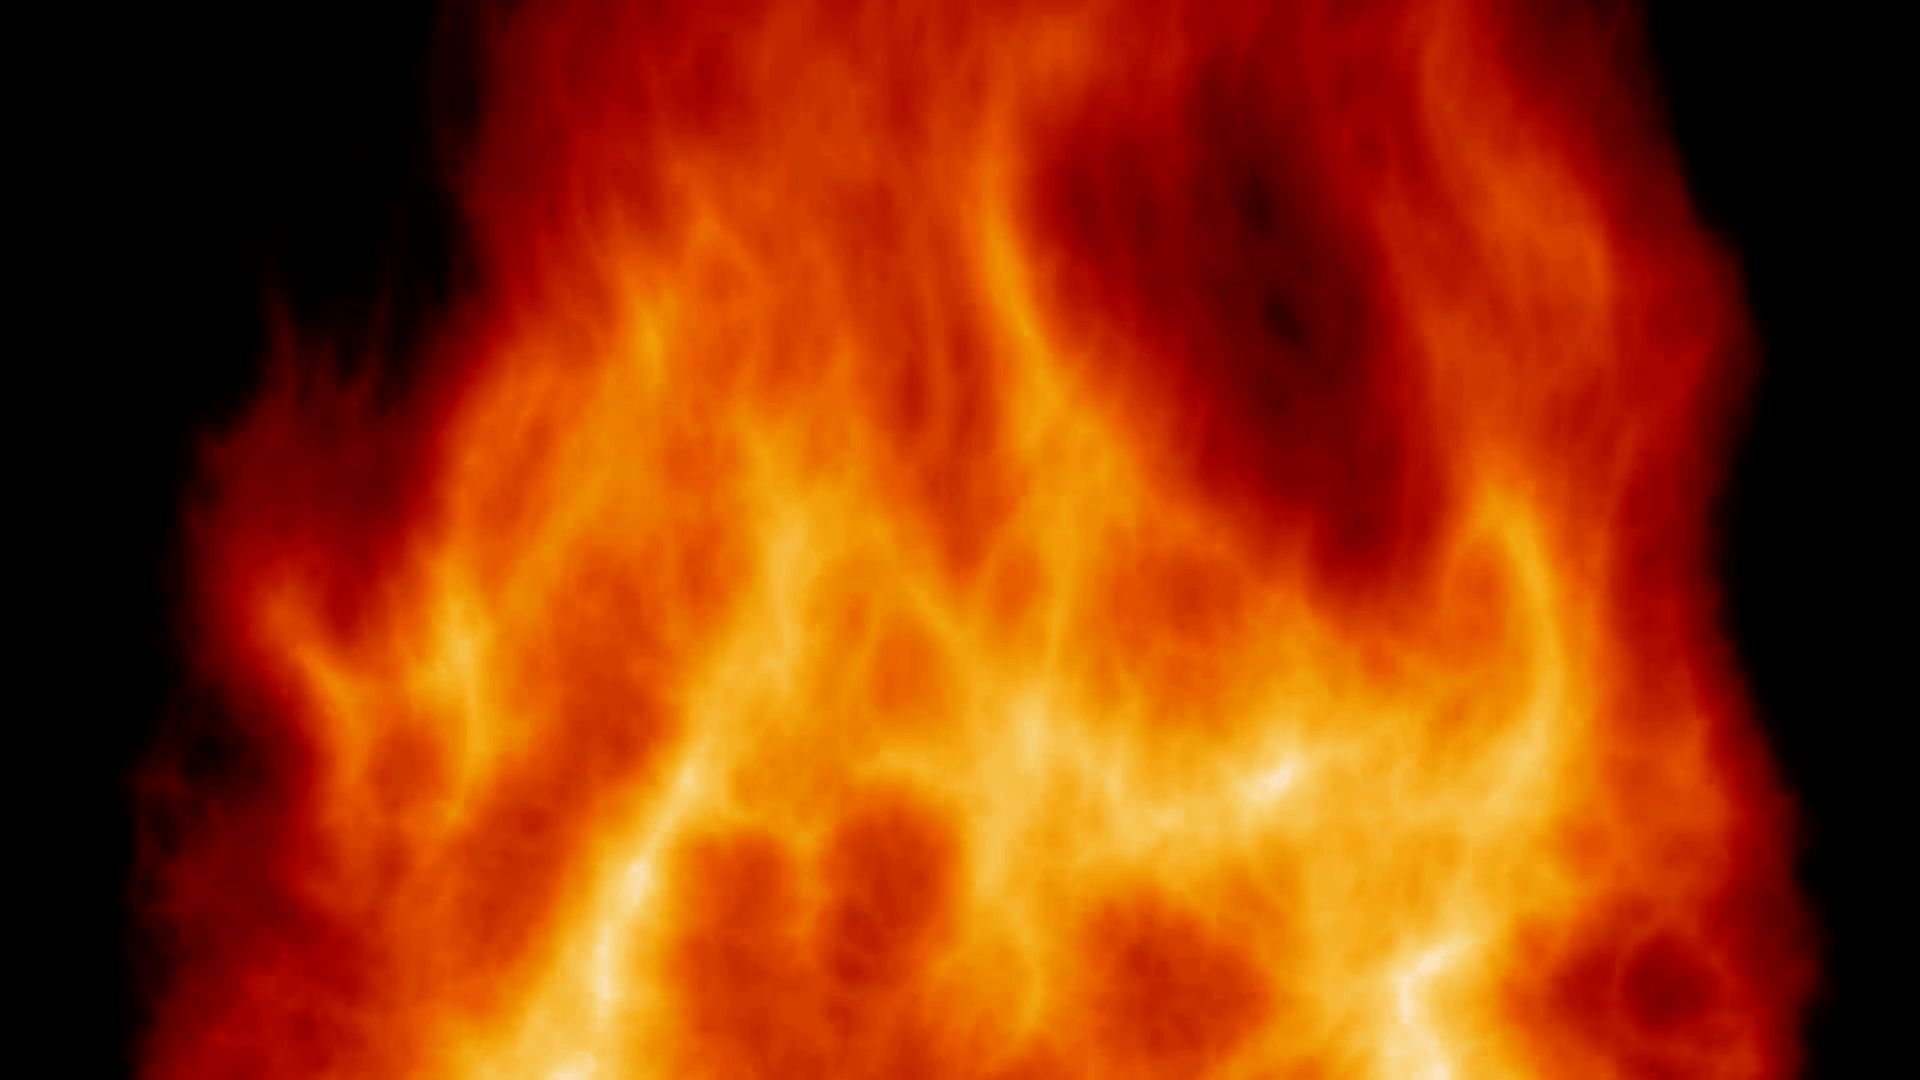 fiery background animation, imitation of powerful fire like wood